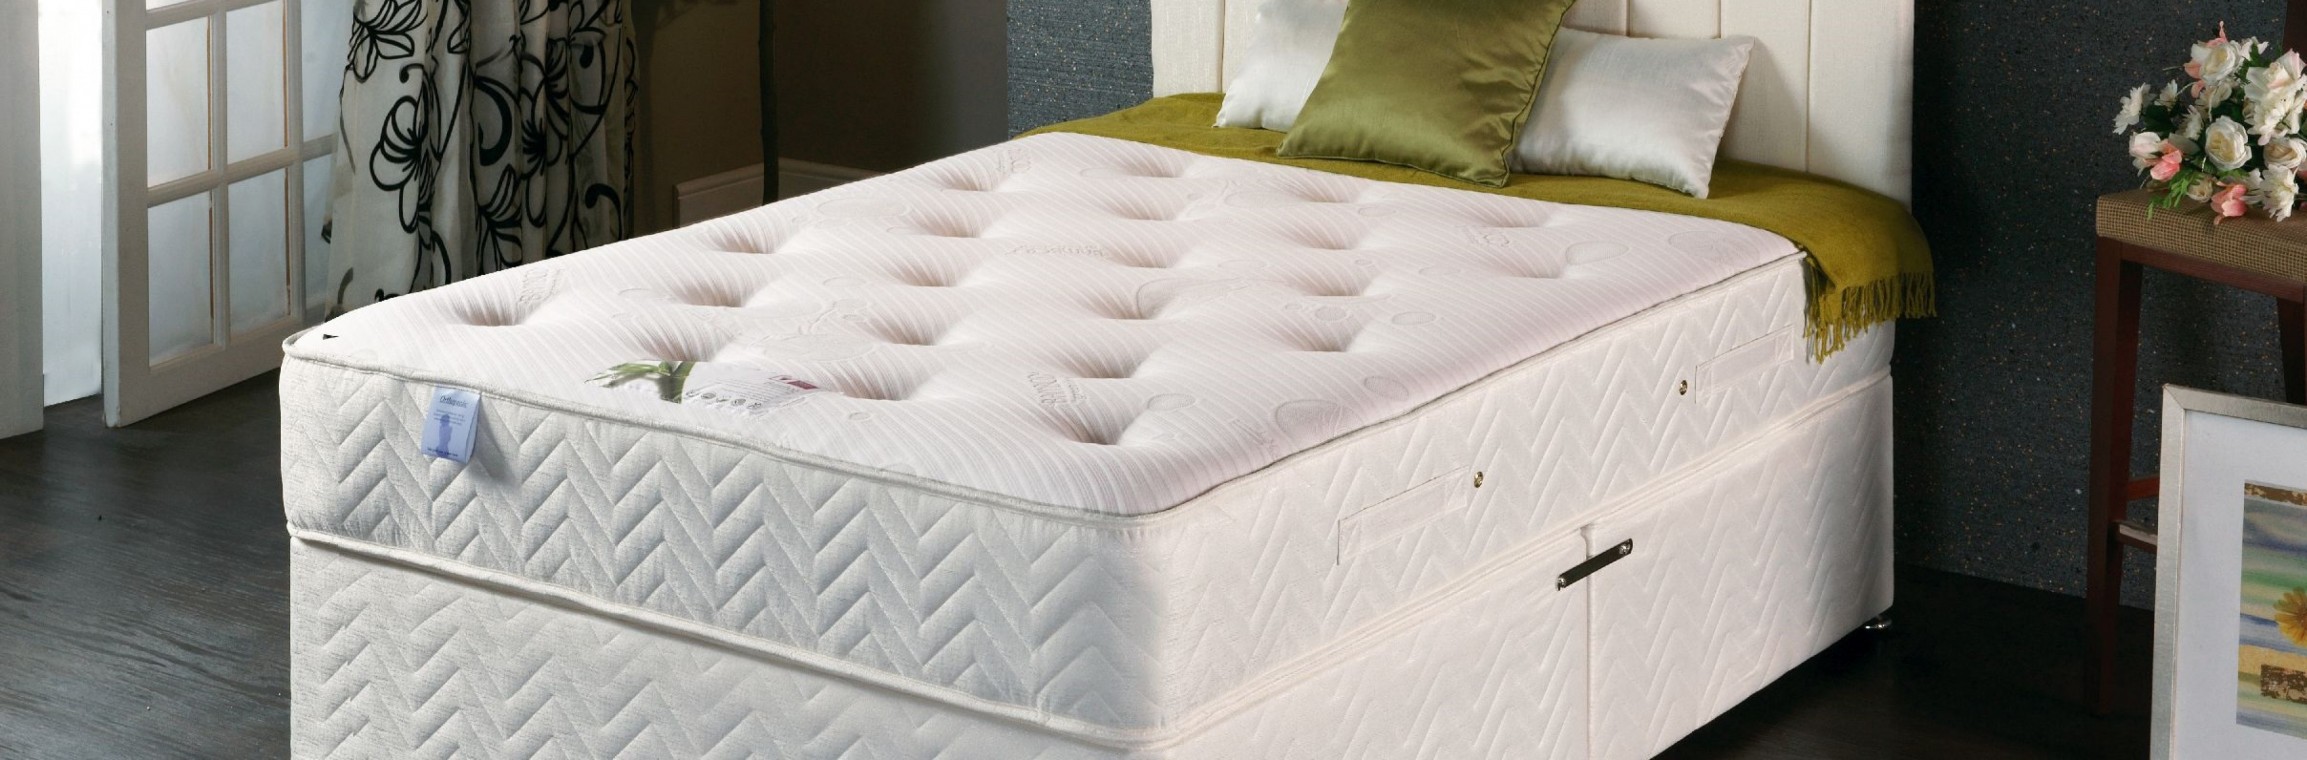 /_images/product-photos/tender-sleep-bamboo-mattress-a.jpg